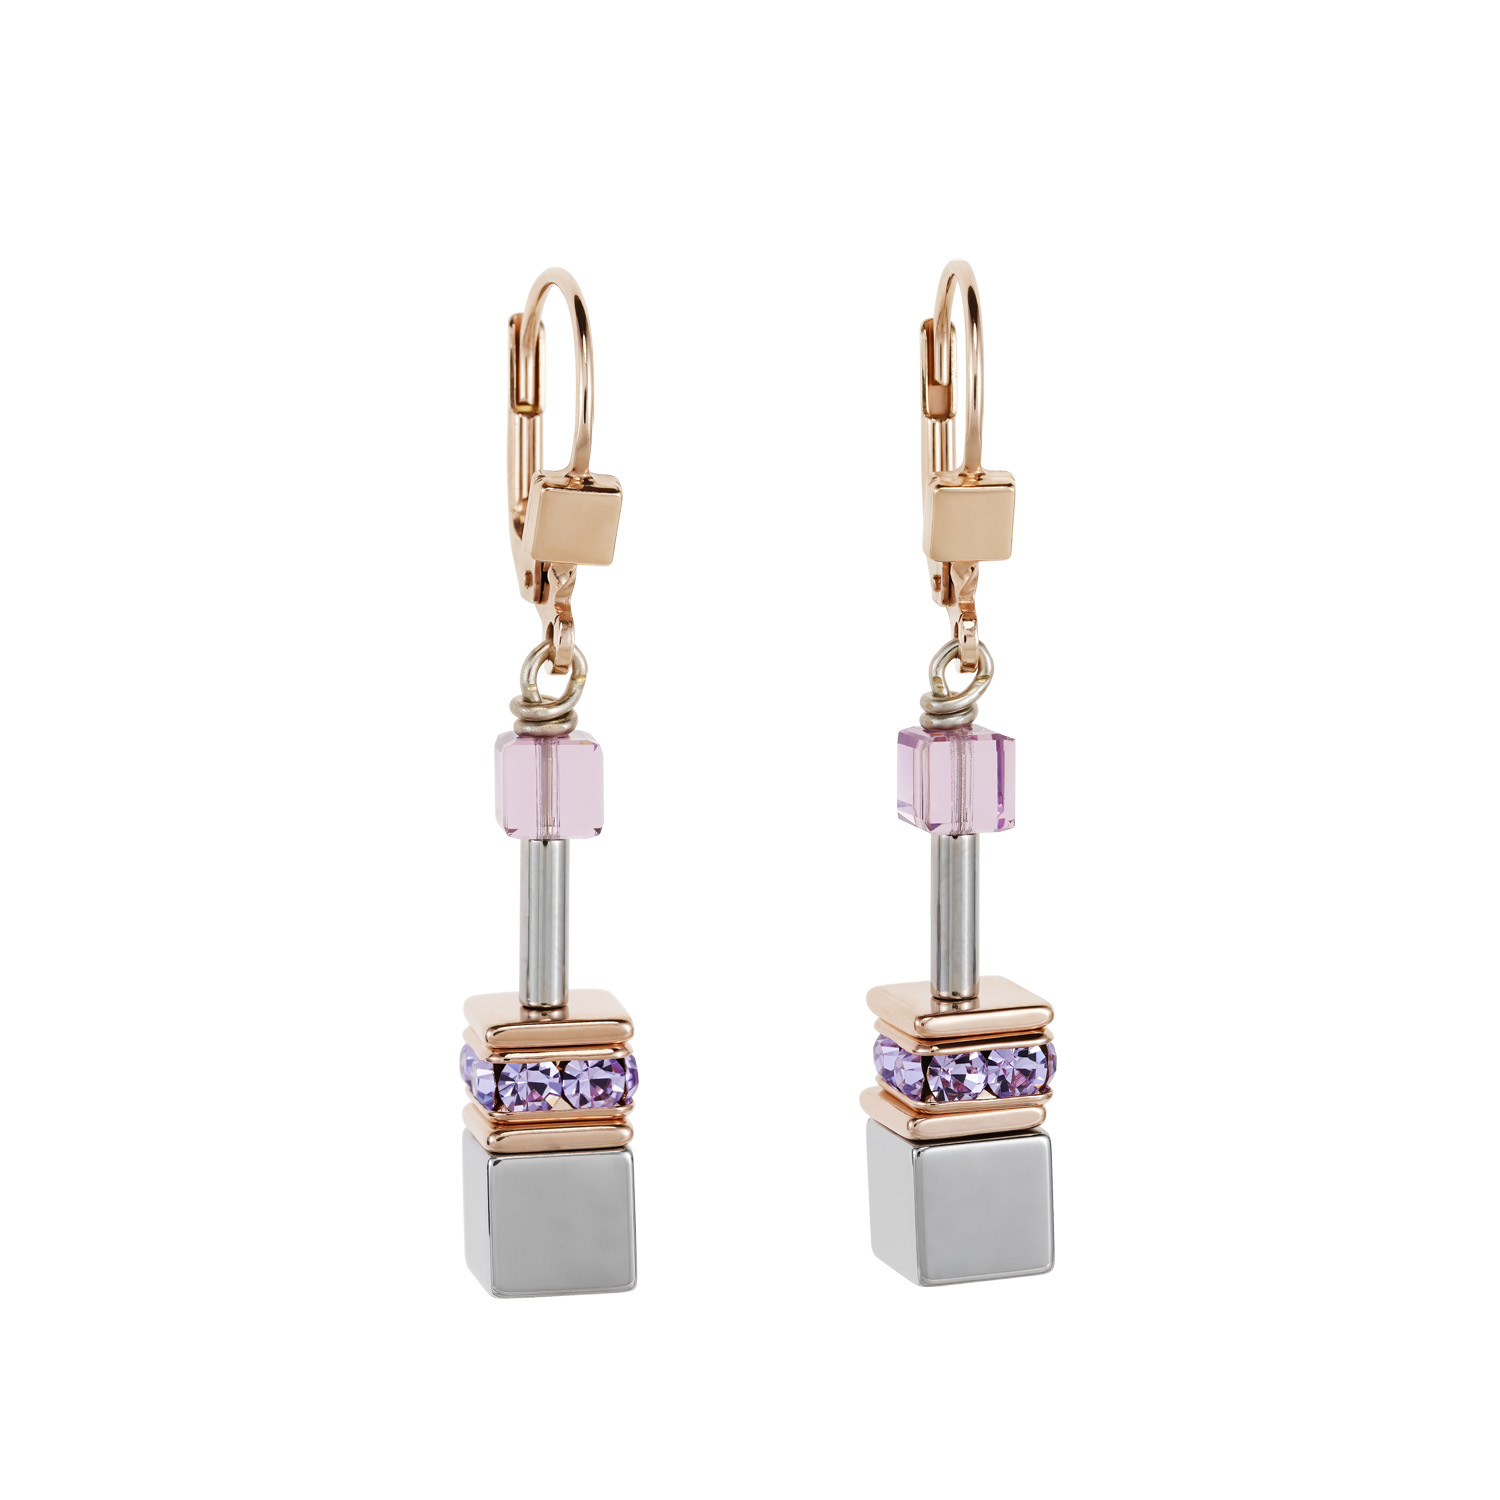 Wholesale OEM/ODM Jewelry Drop Earring Silver High-Polished Finish make custom designed jewelry